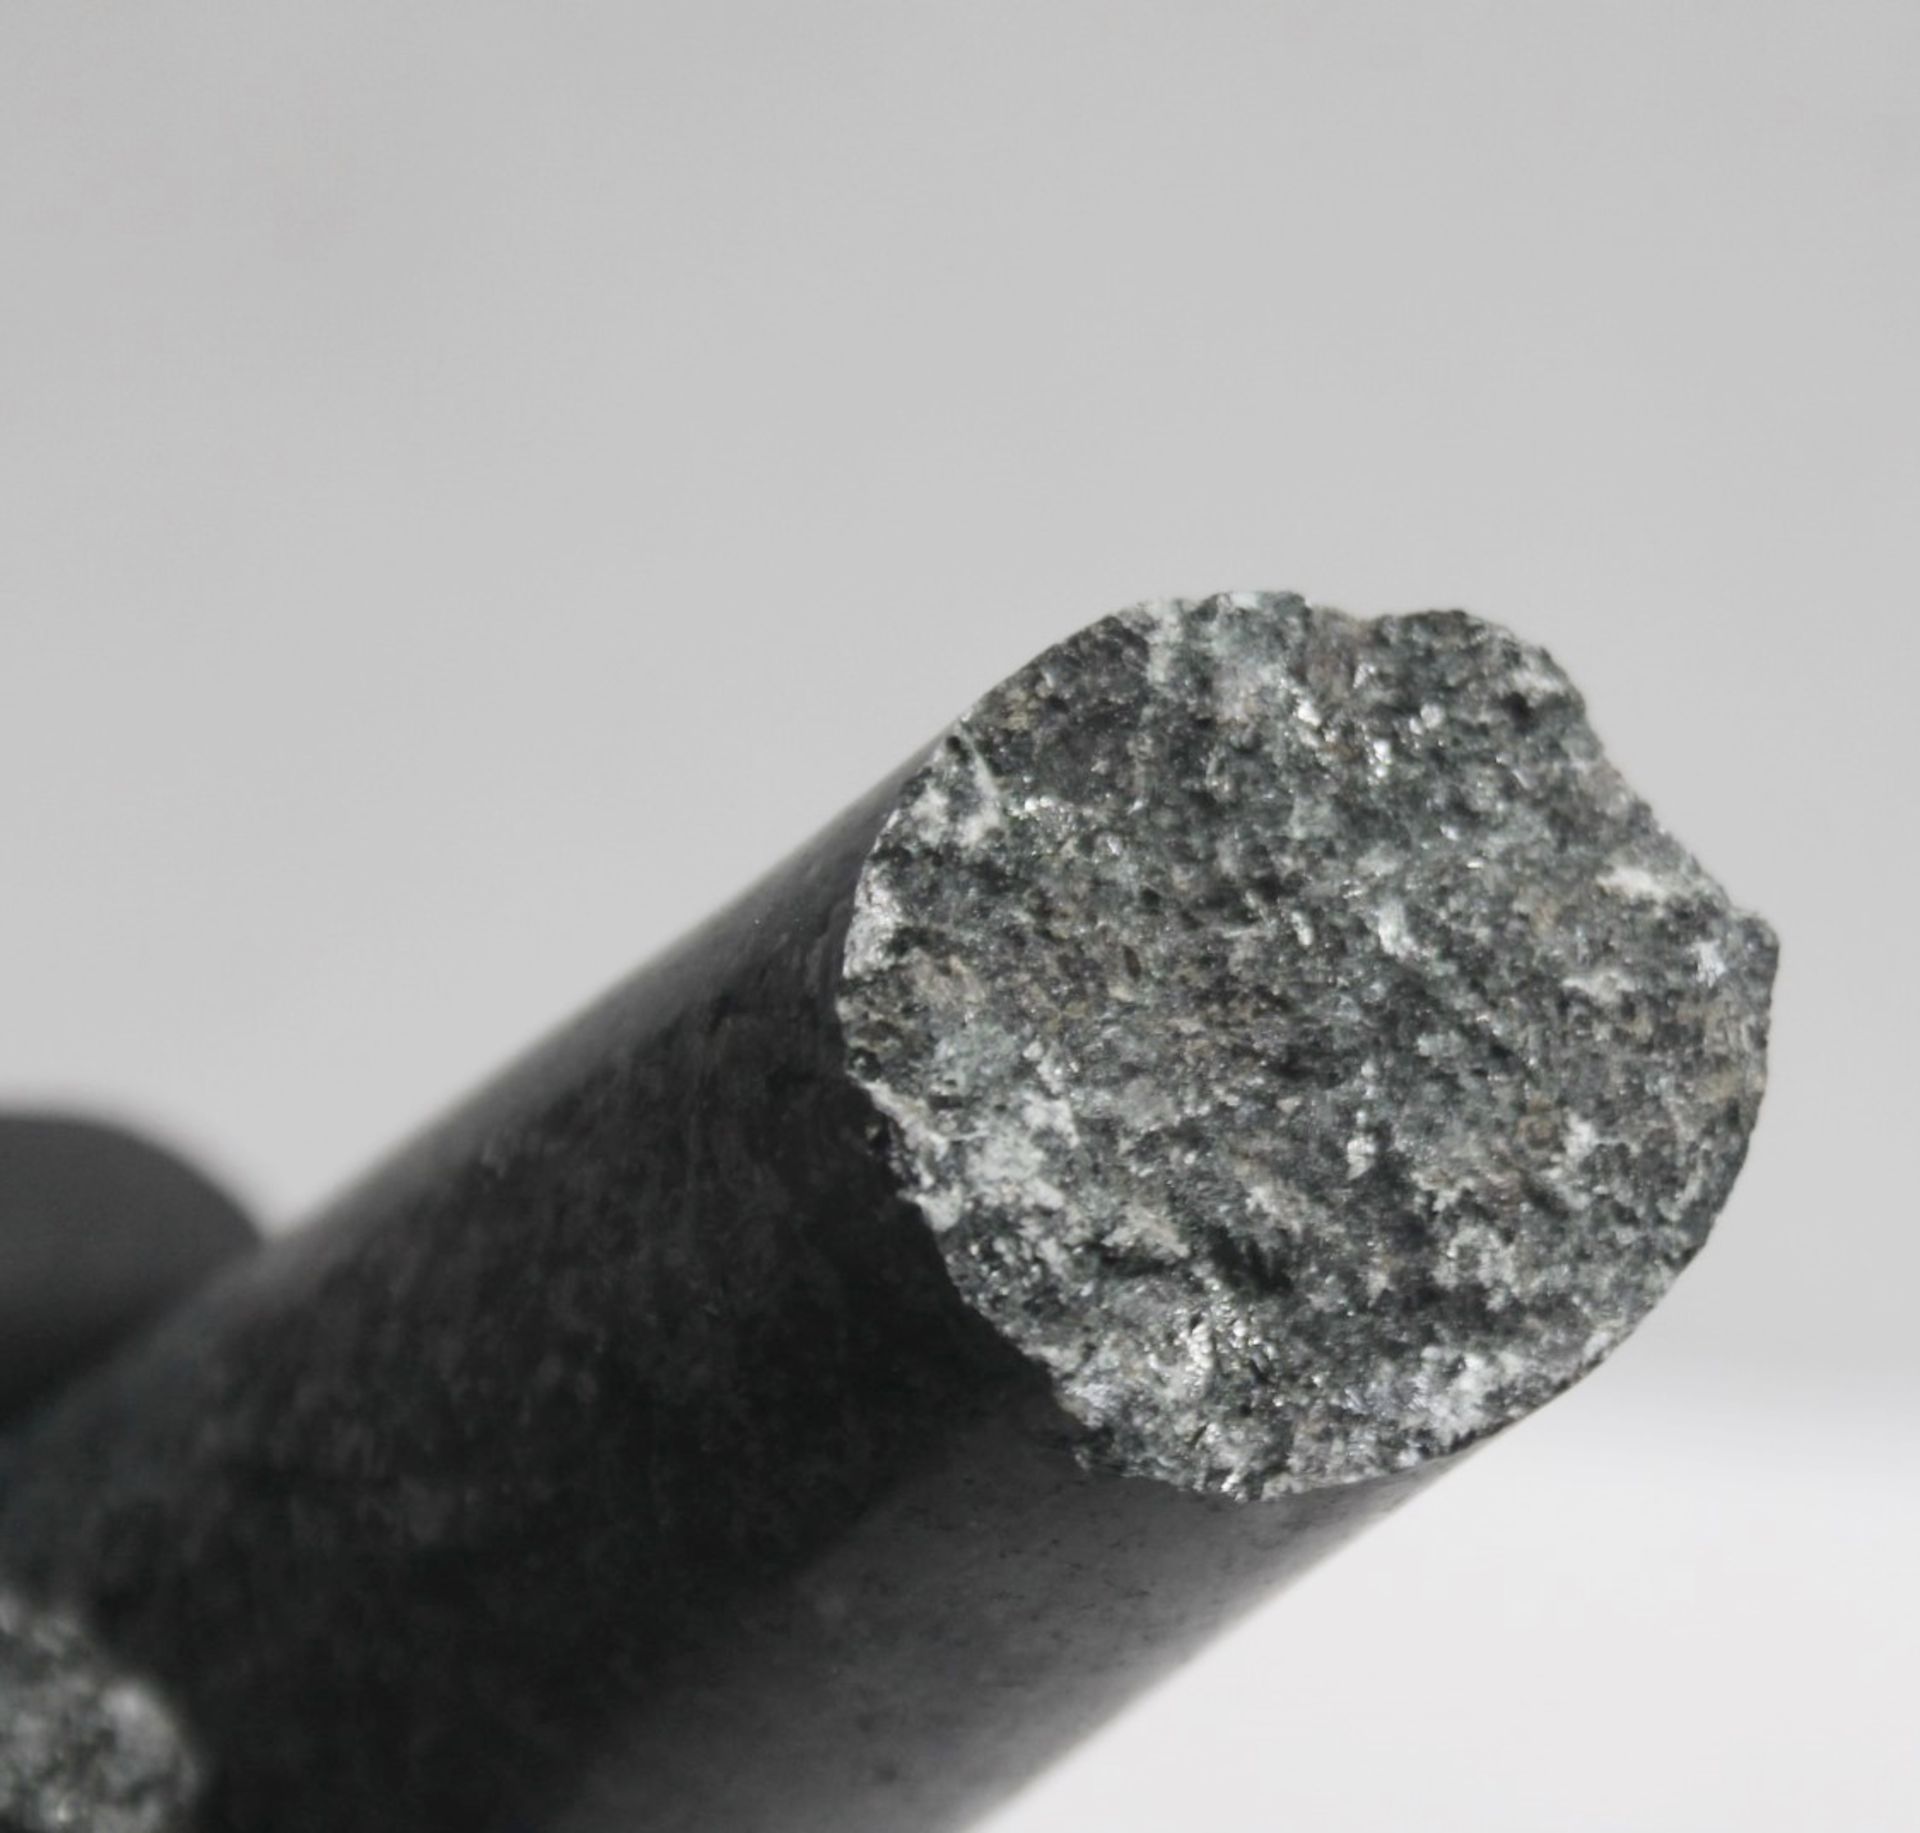 1 x COLE & MASON Granite Pestle & Mortar 18cm, Black - Unused Boxed Stock - Ref: 3310048/HAS2103/ - Image 5 of 8